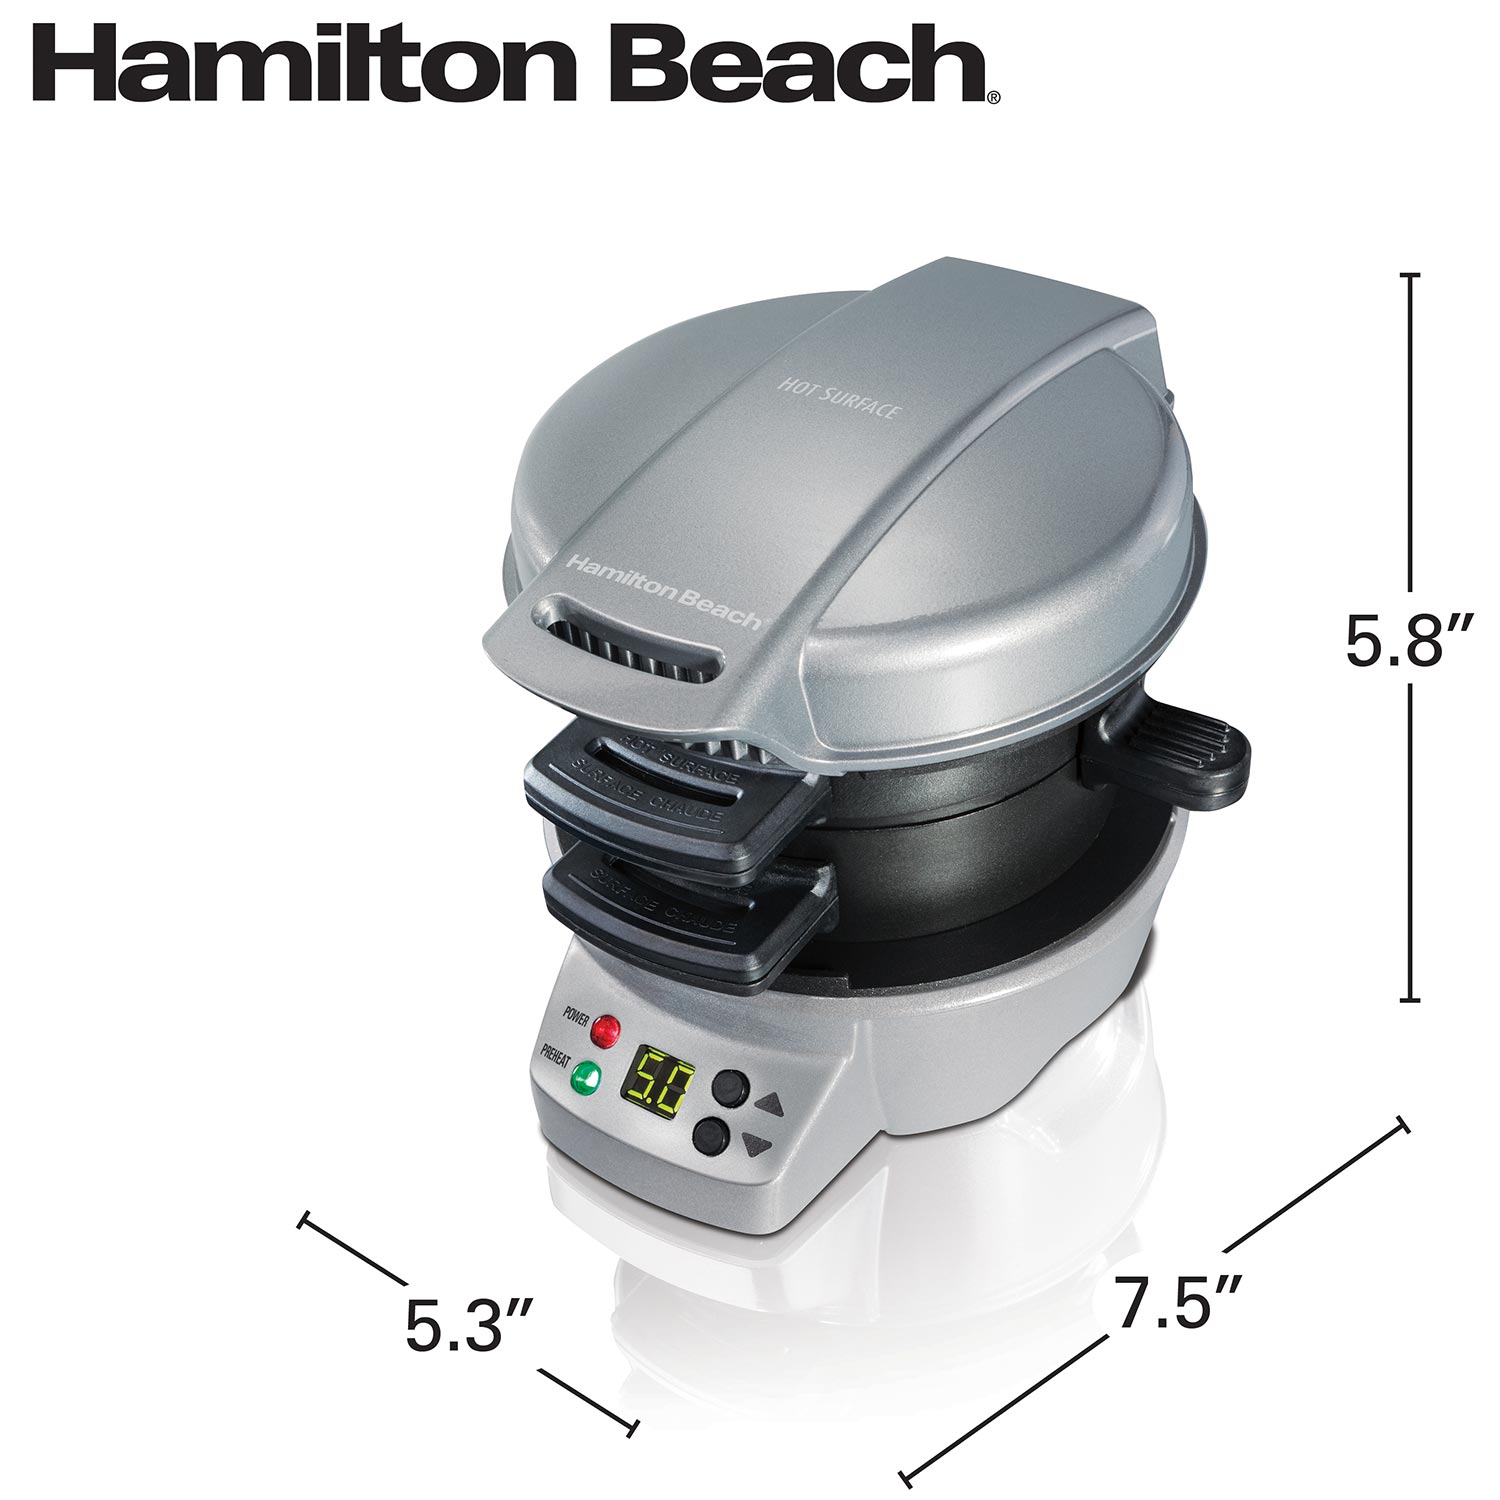 Hamilton Beach Breakfast Sandwich Maker with Timer - Dark Gray - 25478